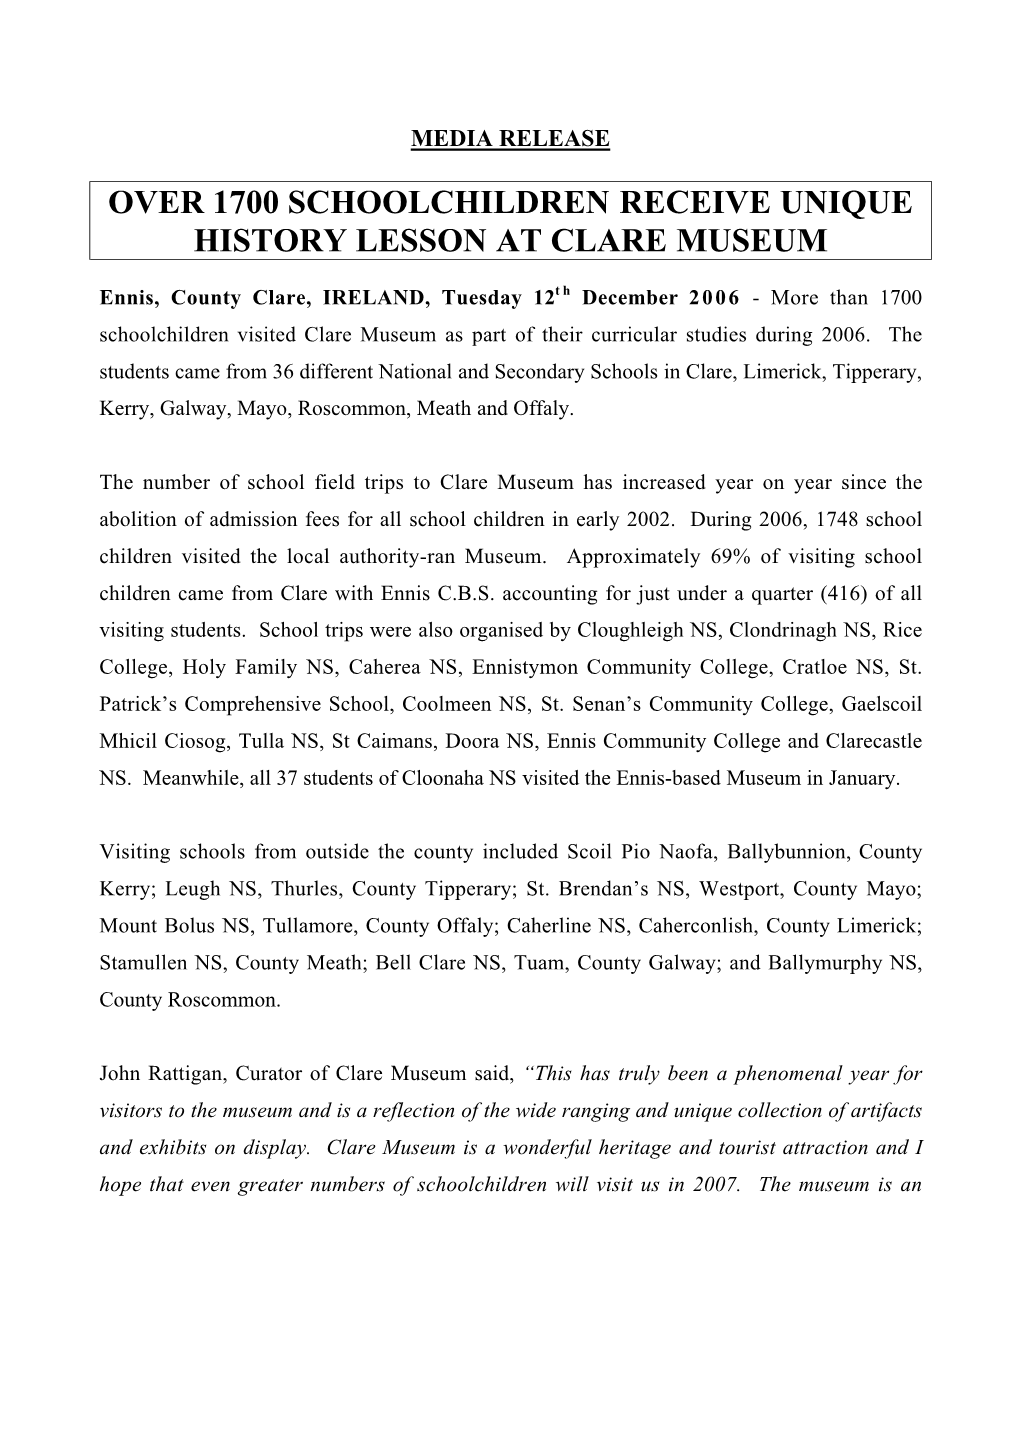 Over 1700 Schoolchildren Receive Unique History Lesson at Clare Museum